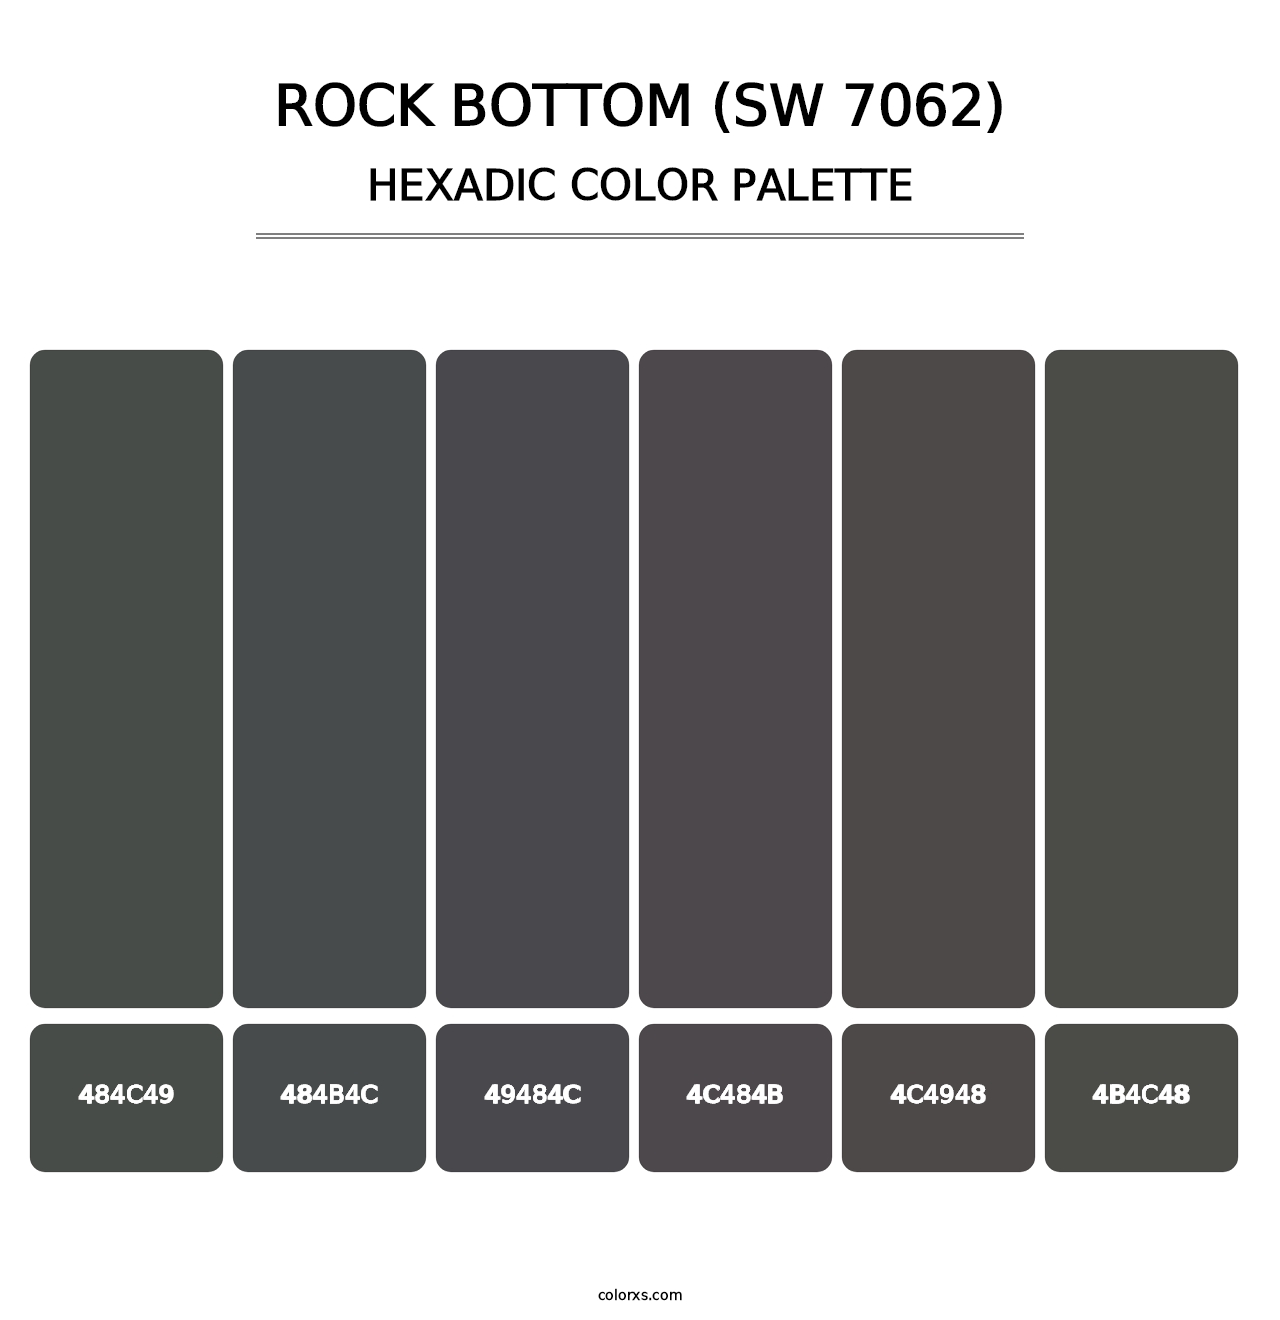 Rock Bottom (SW 7062) - Hexadic Color Palette